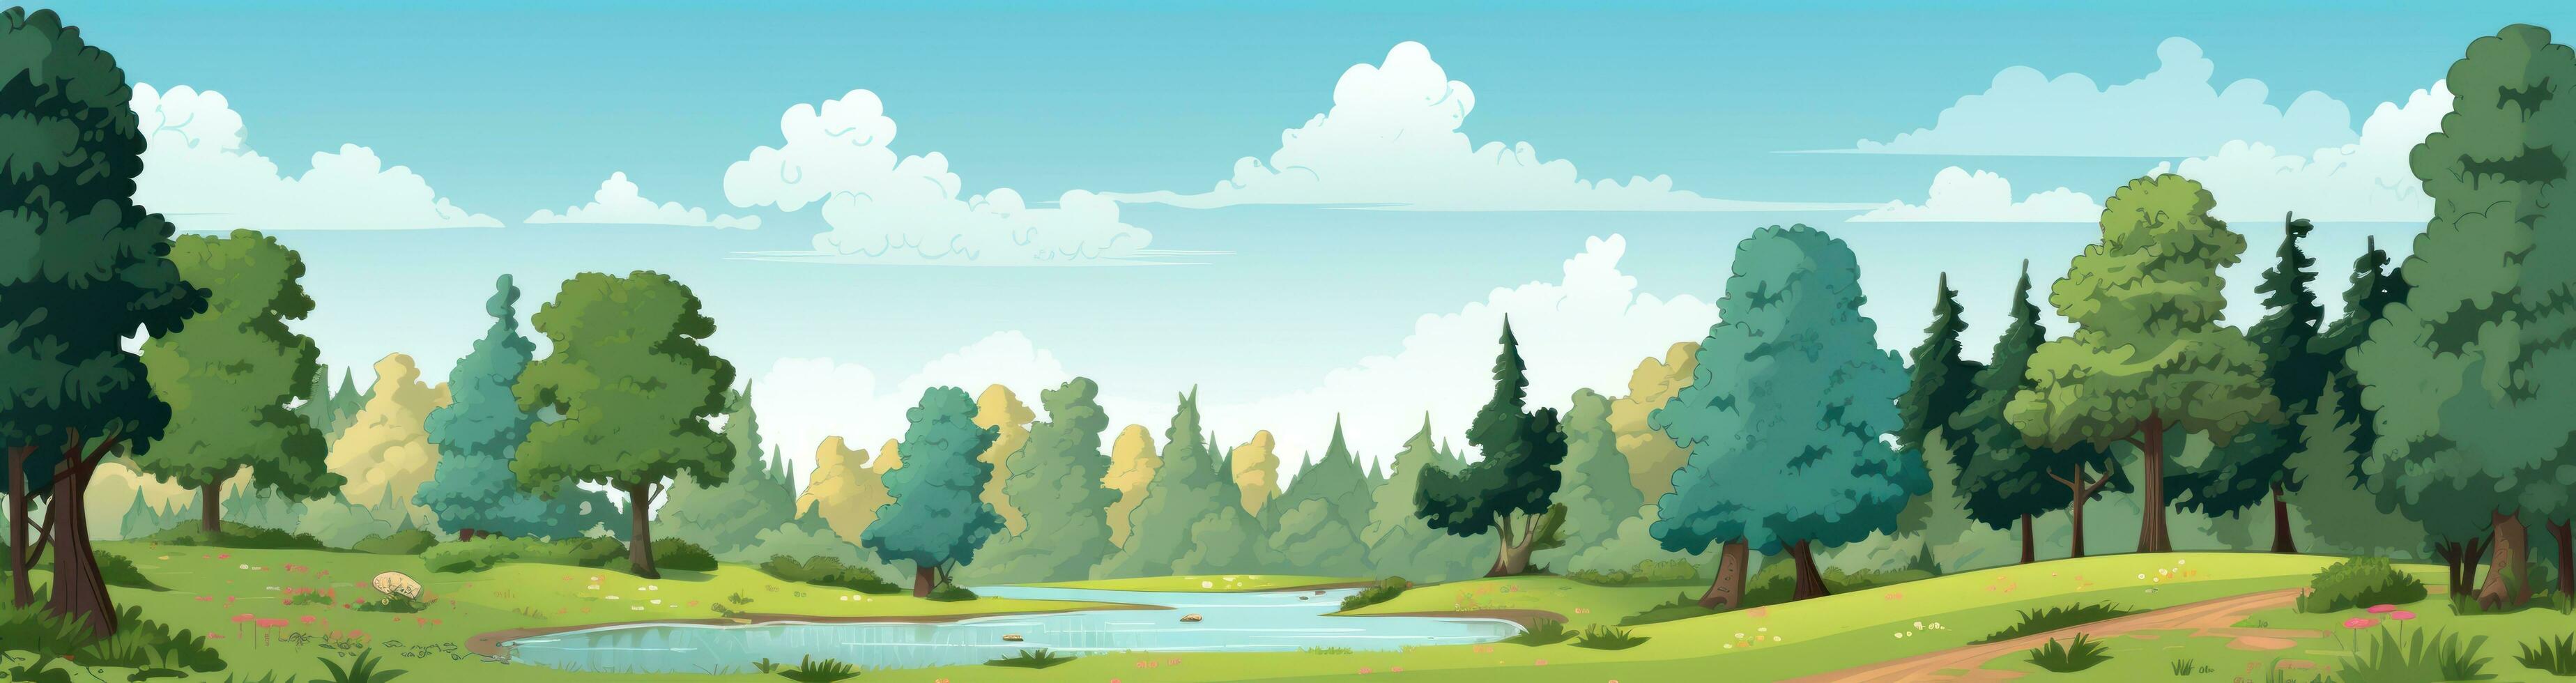 dessin animé forêt illustration photo